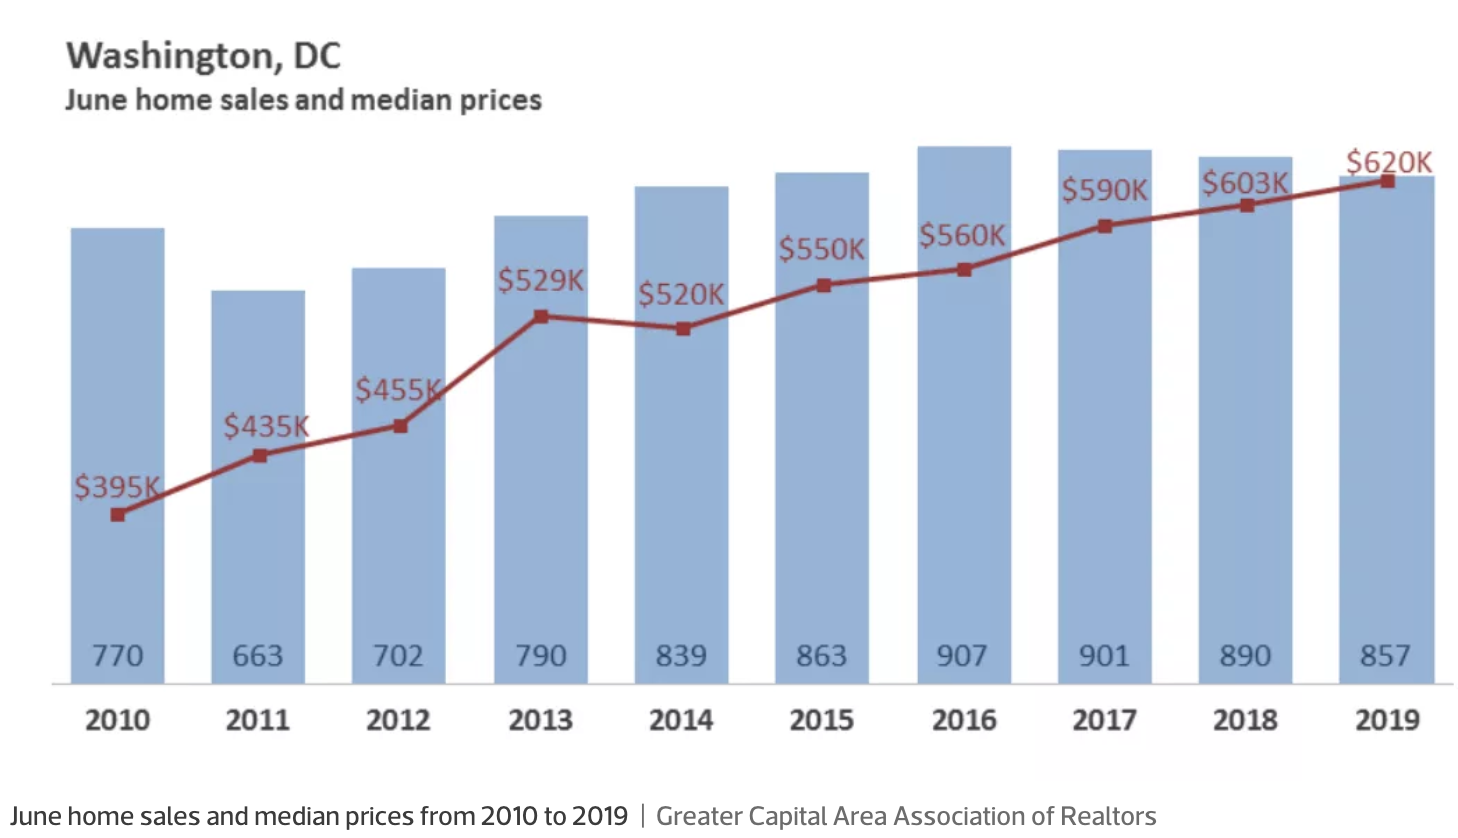 Washington D.C. median home price